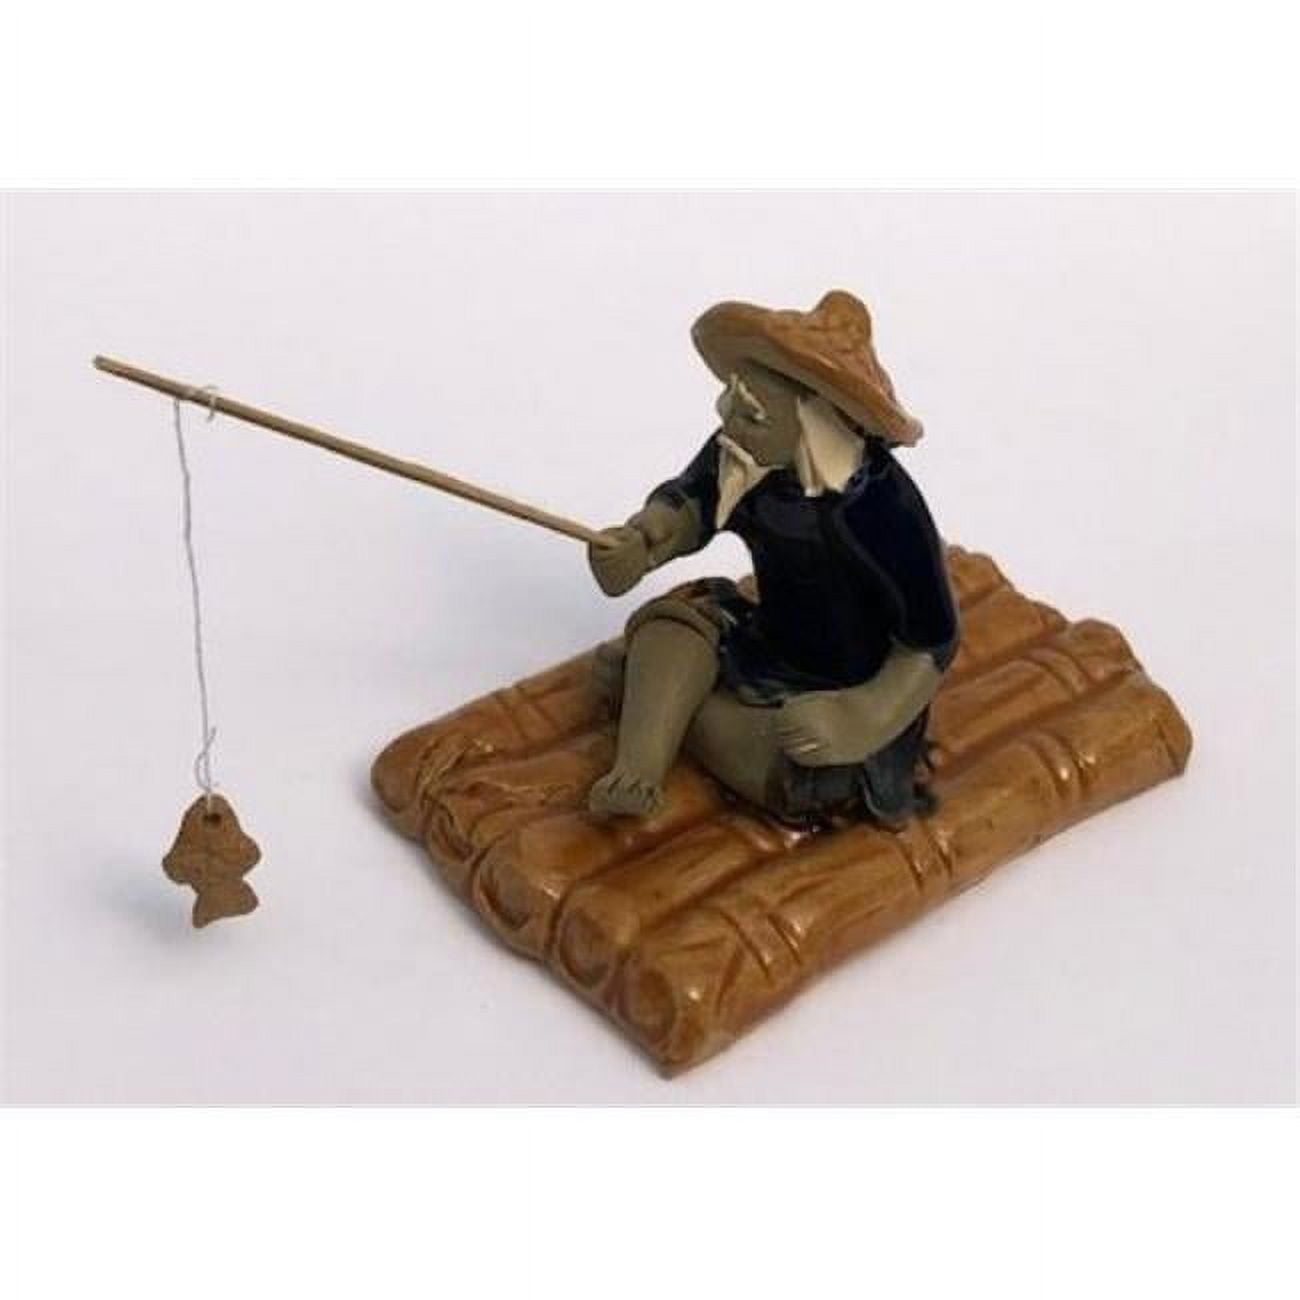 Picture of Bonsai Boy of New York e3518 2.75 in. Glazed Fisherman Sitting on Raft Miniature Ceramic Figurine